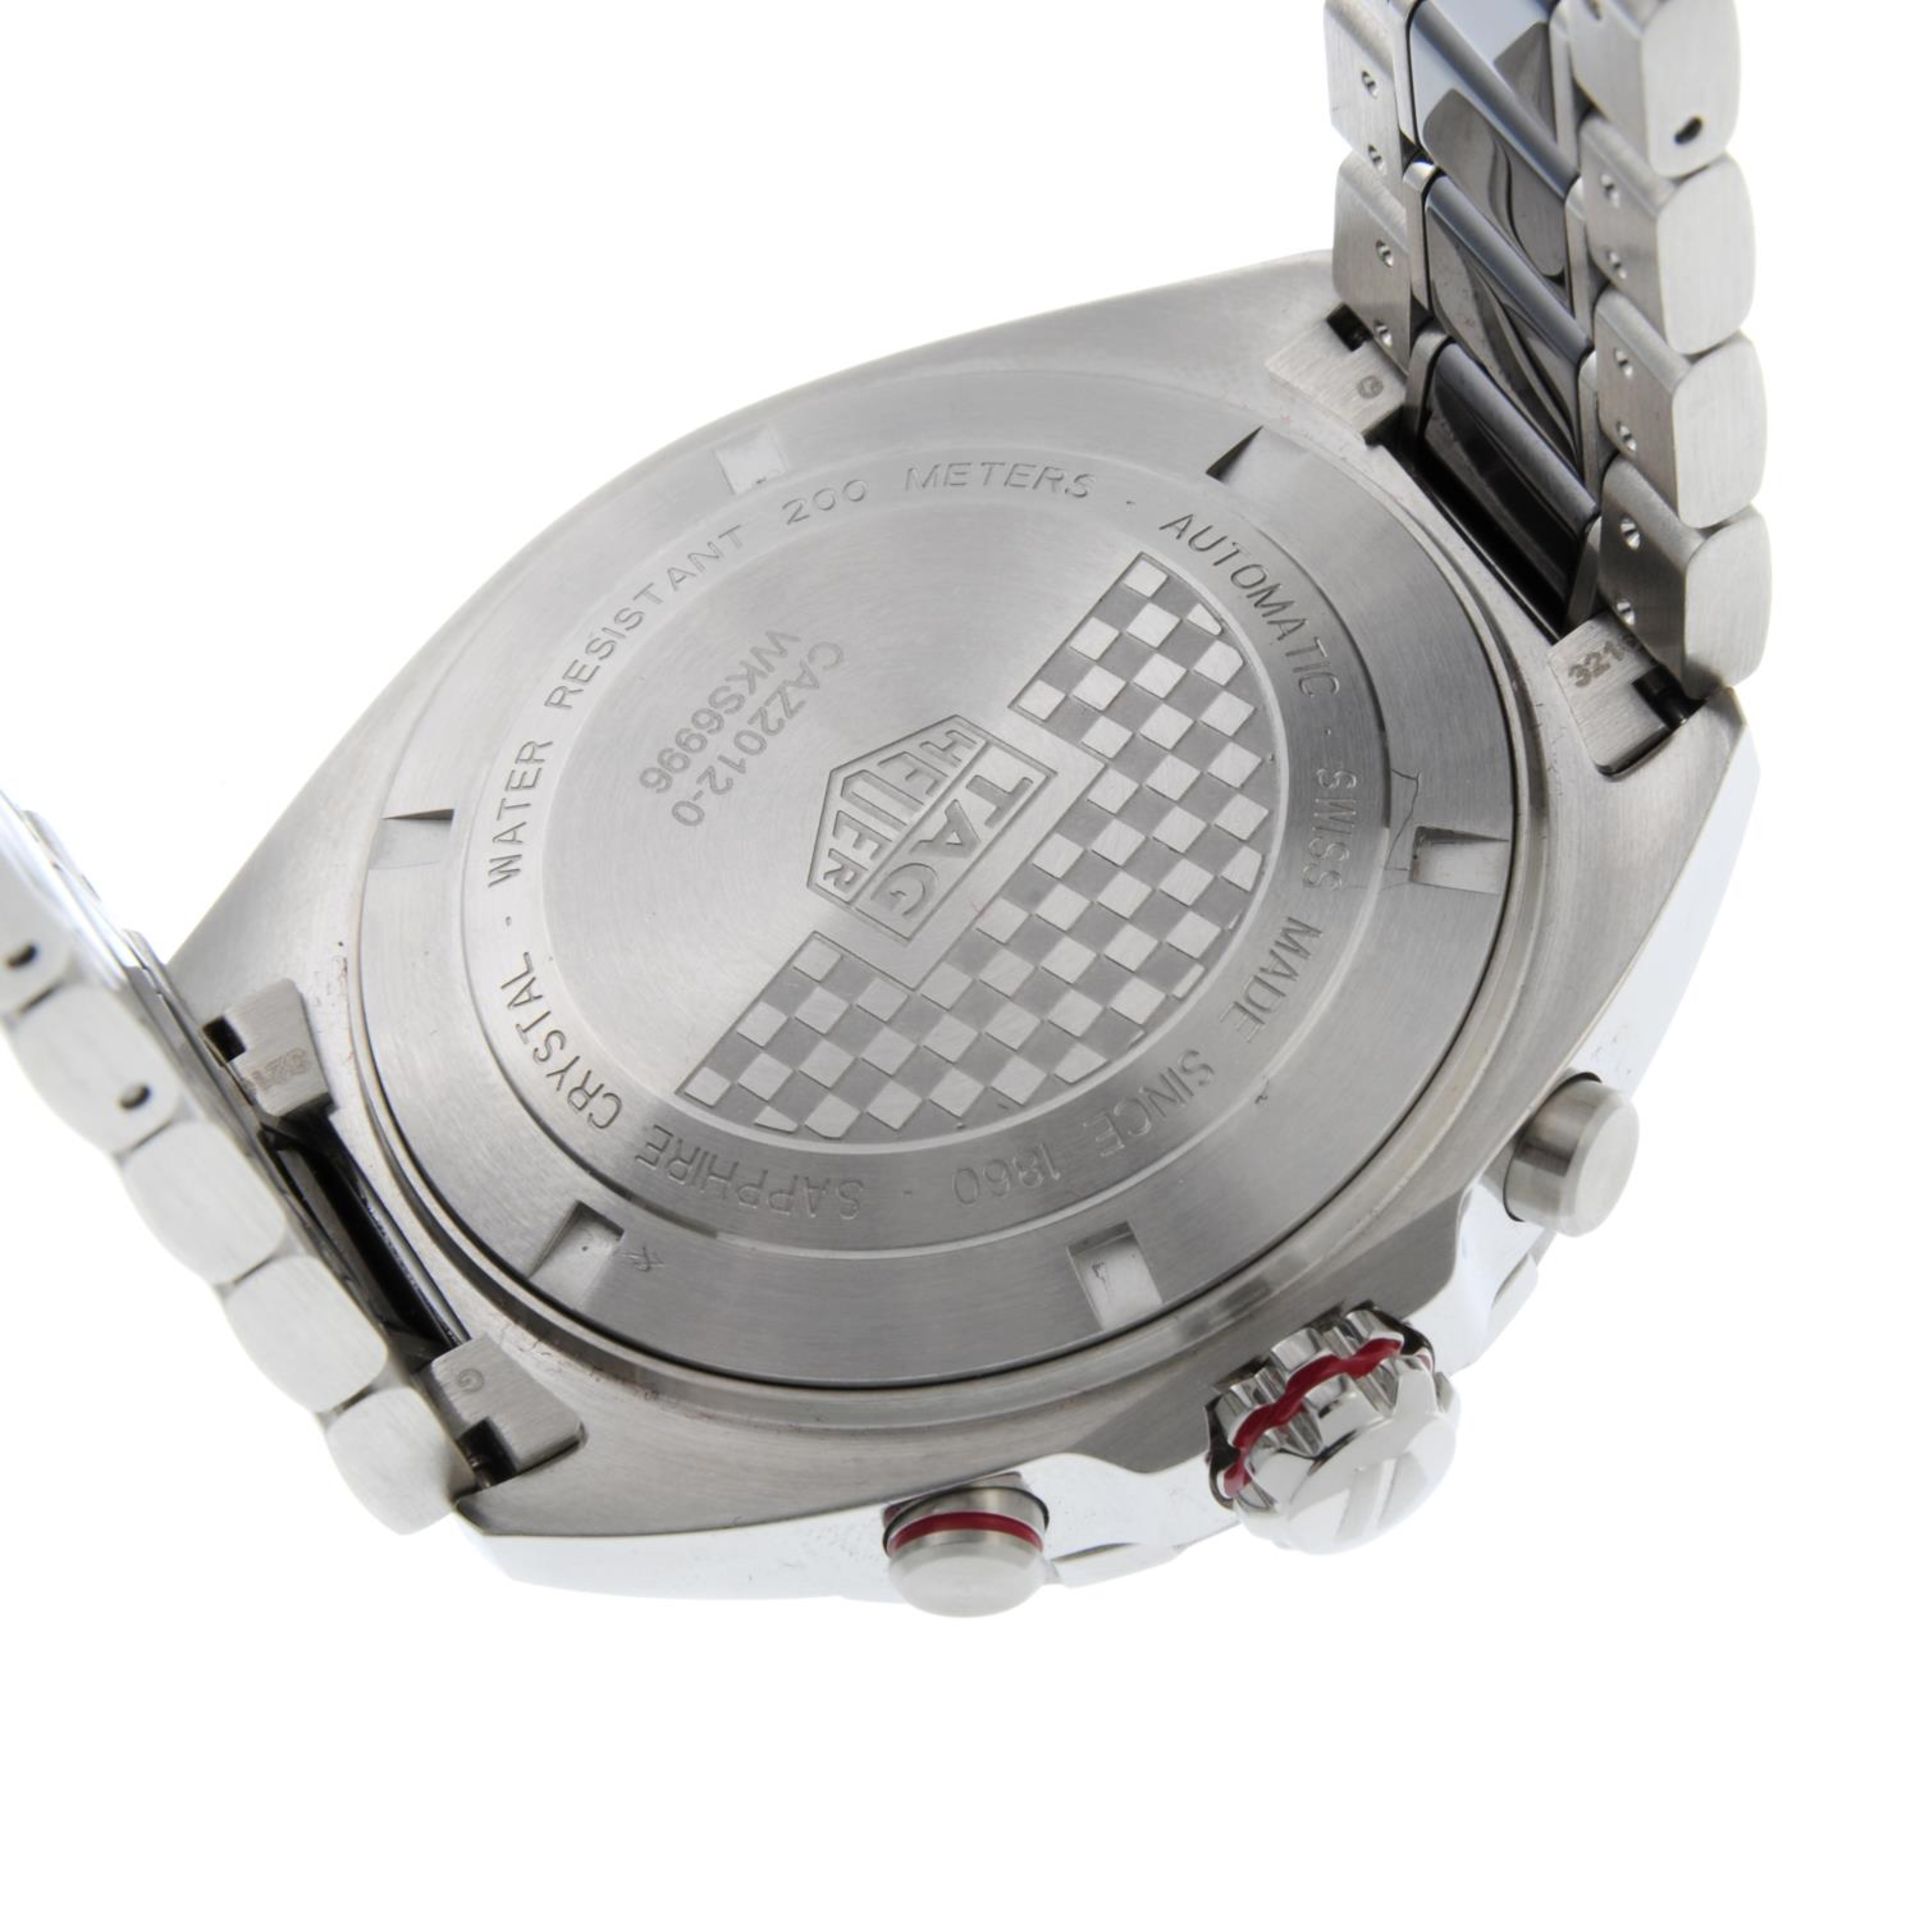 TAG HEUER - a Formula 1 chronographbracelet watch. - Image 4 of 4